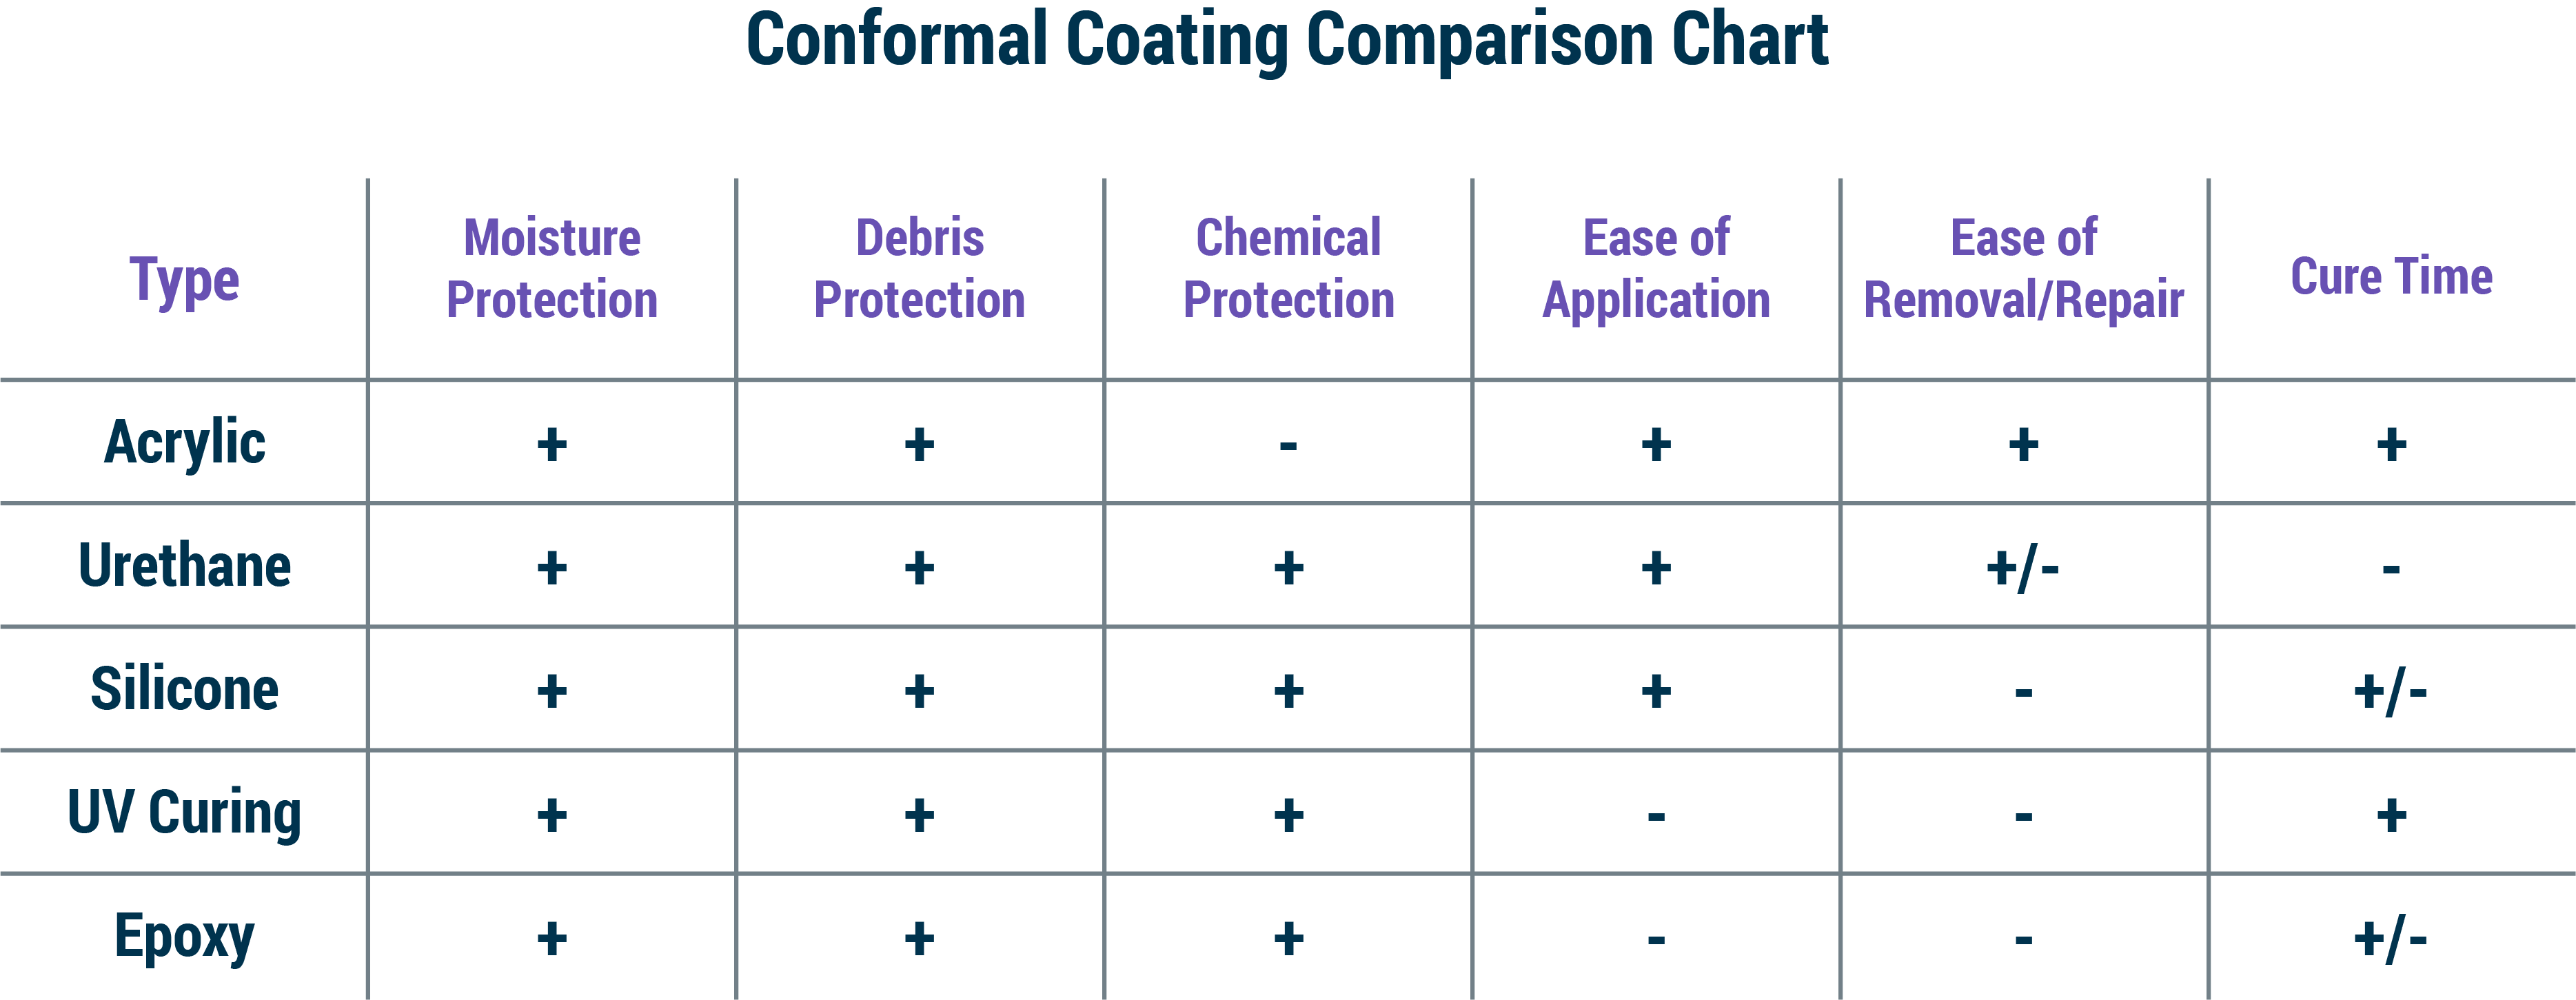 Conformal Coating Comparison Chart